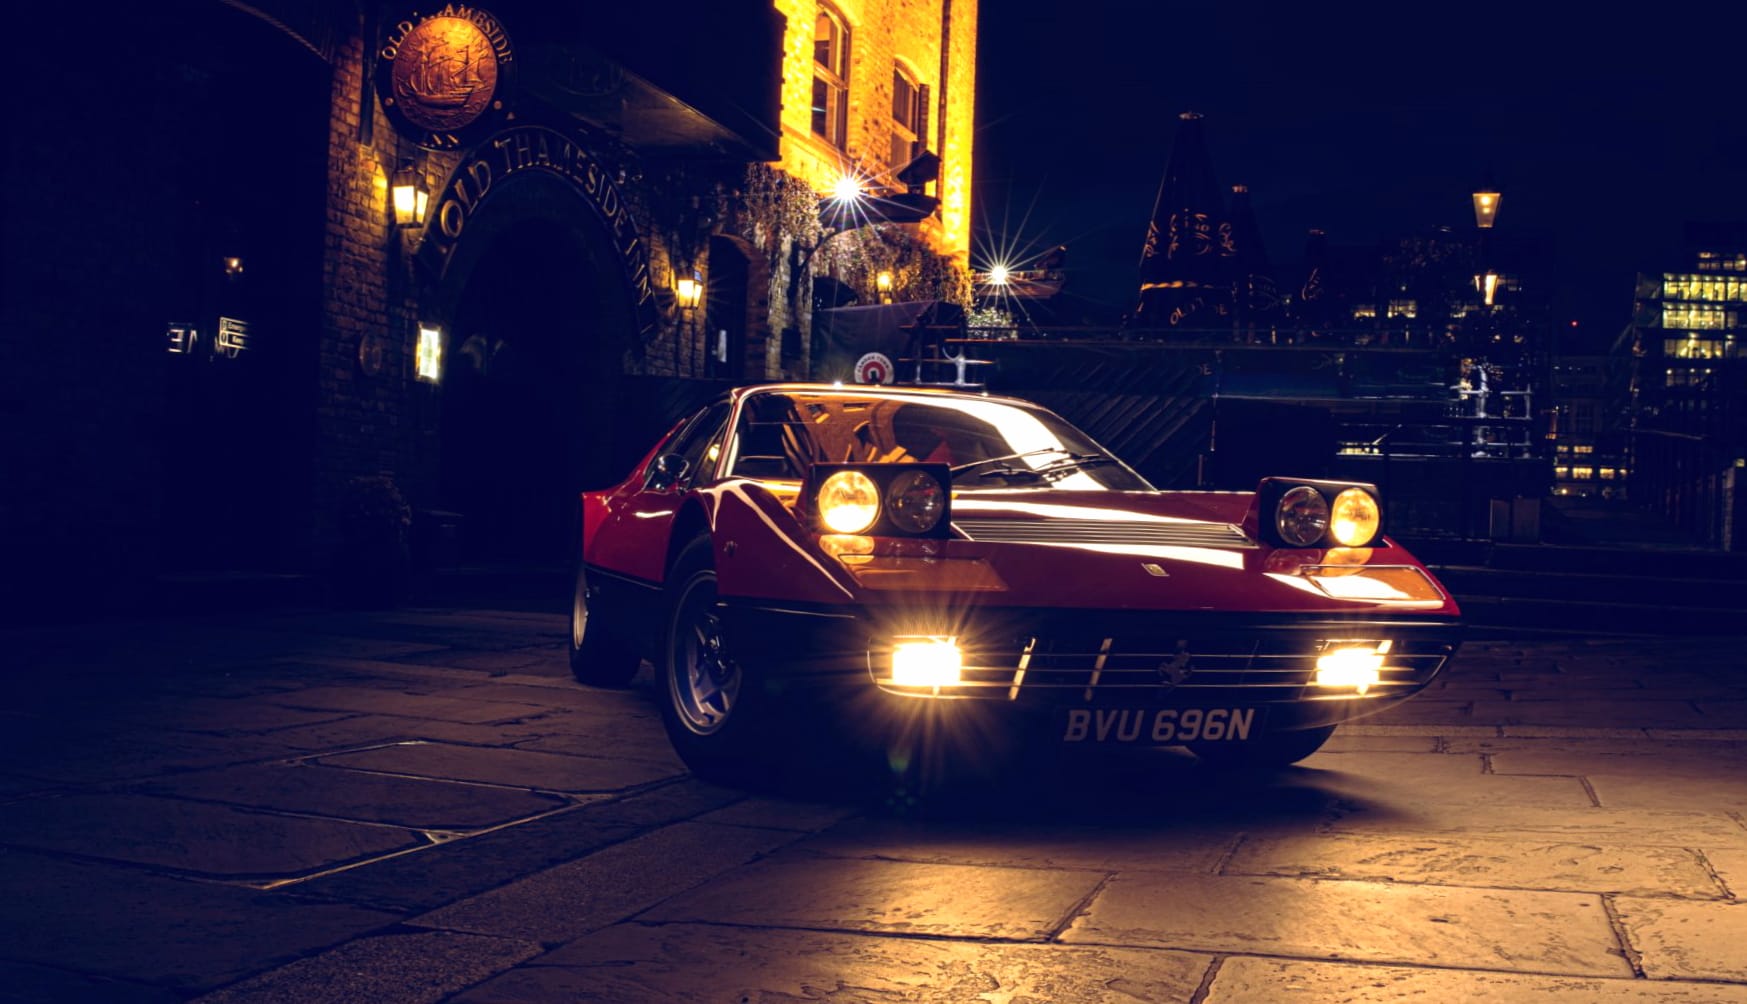 Ferrari Berlinetta Boxer at 1600 x 1200 size wallpapers HD quality